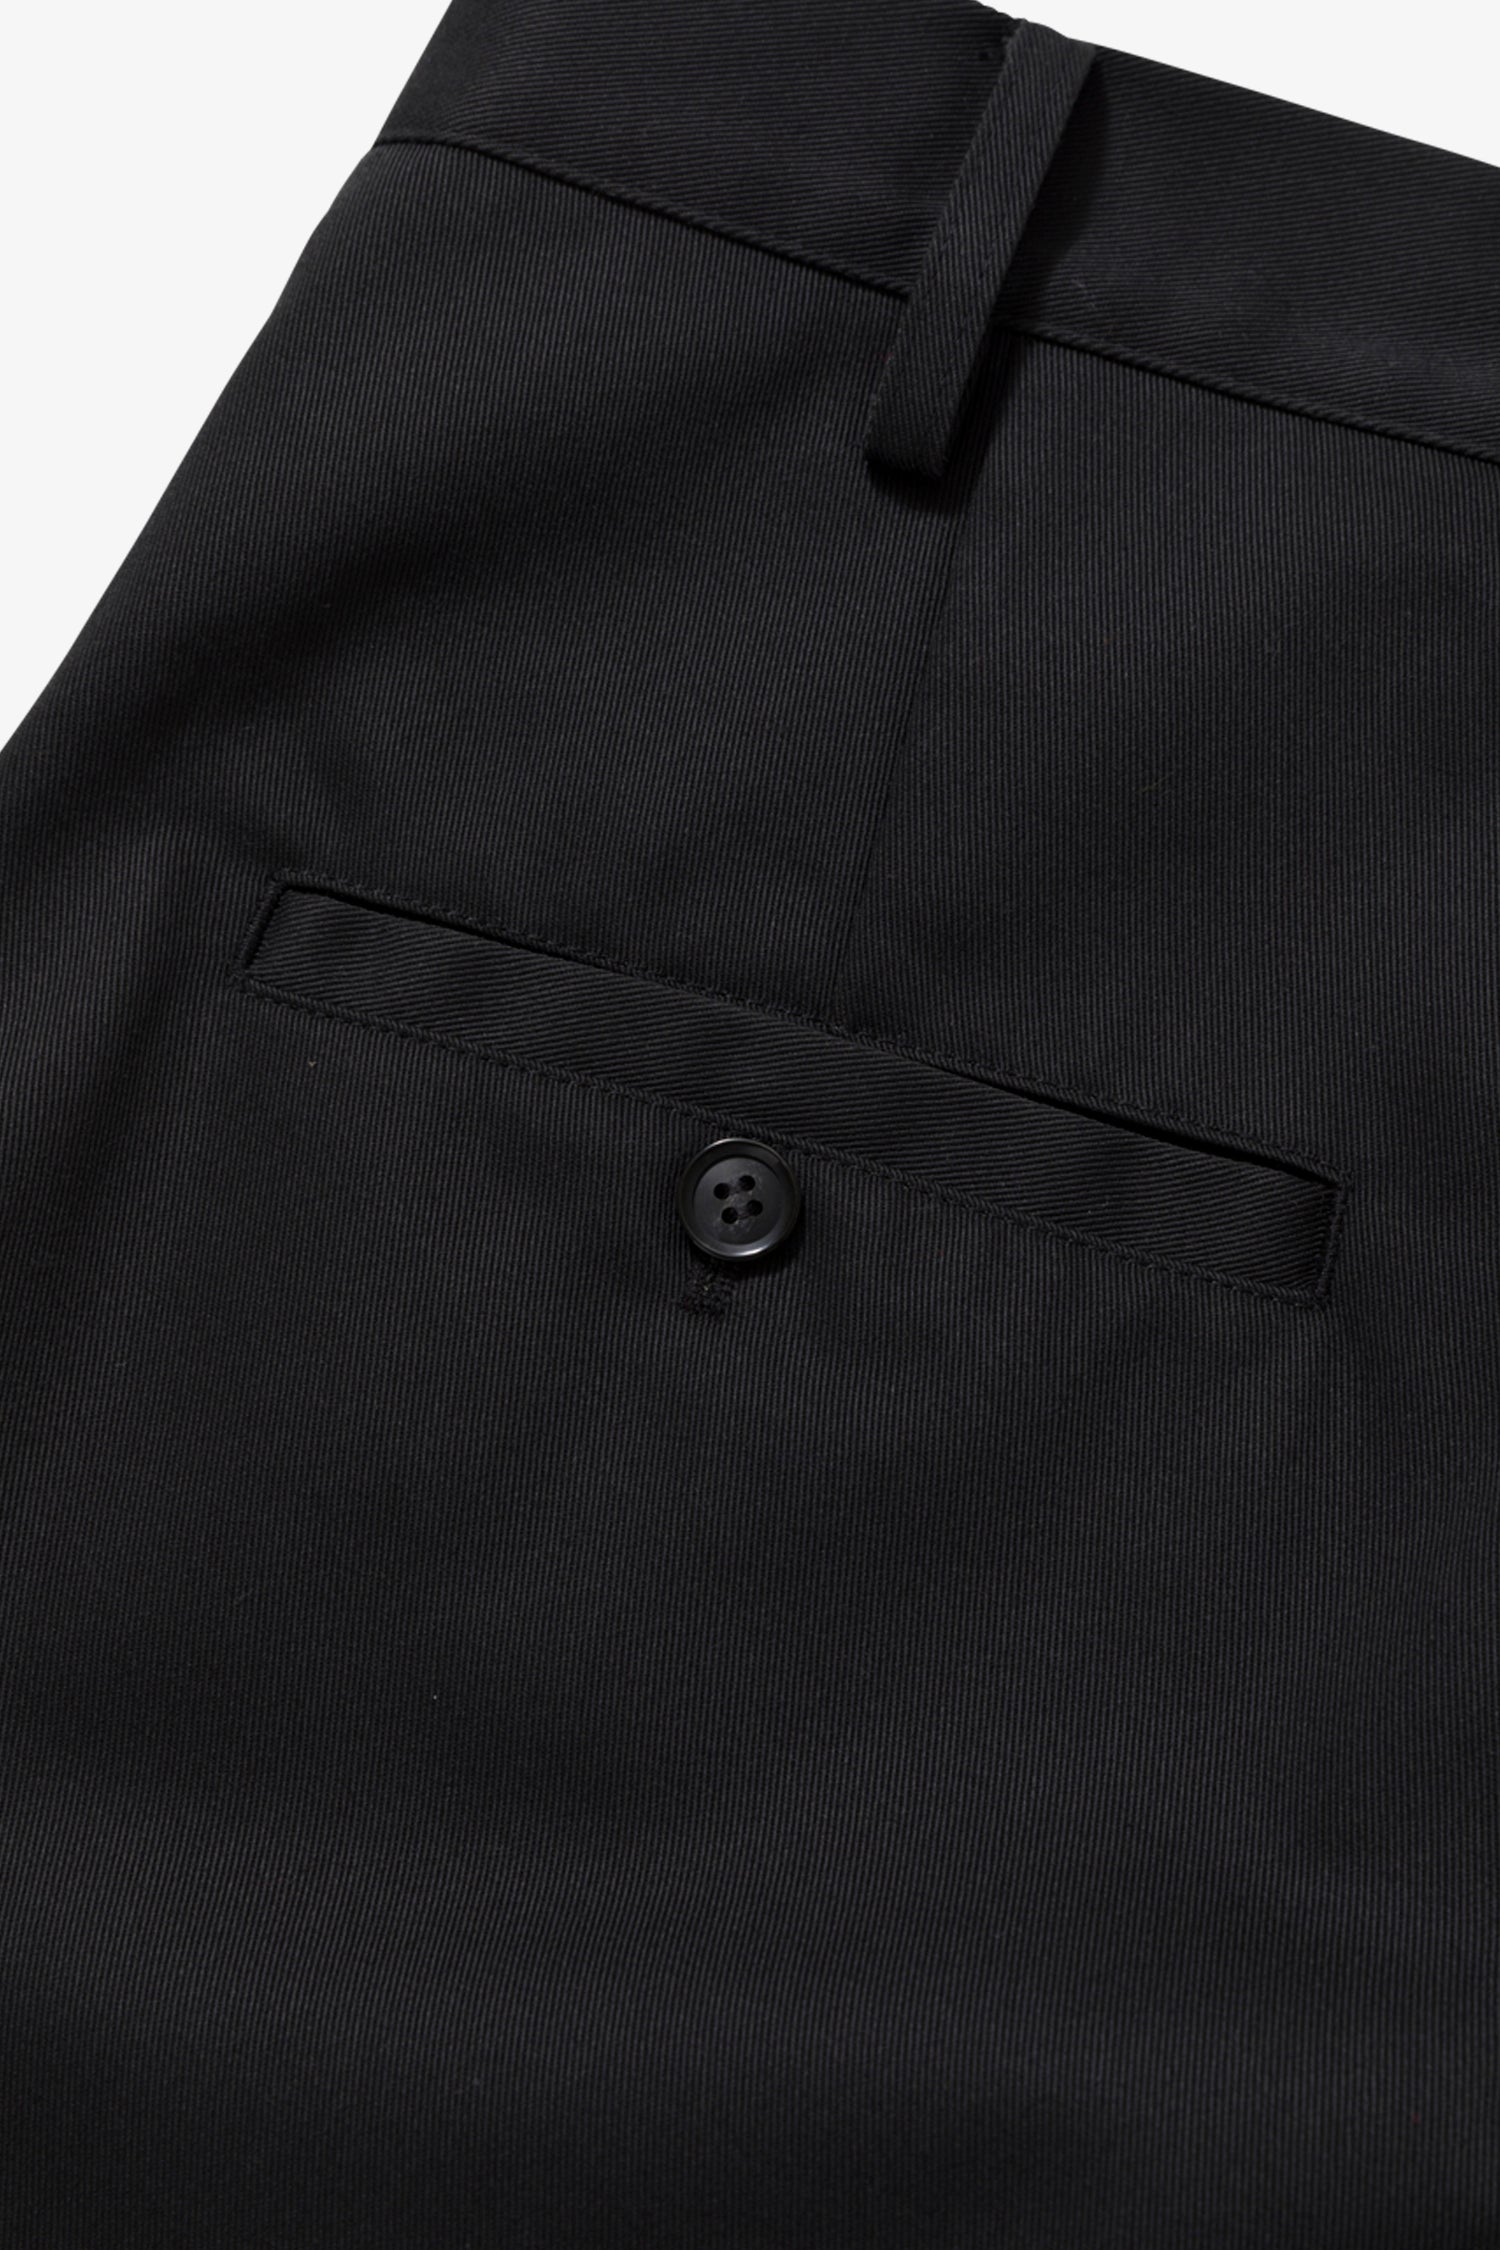 Selectshop FRAME - BLACKEYEPATCH Tailored Pants by sulvam Bottoms Dubai